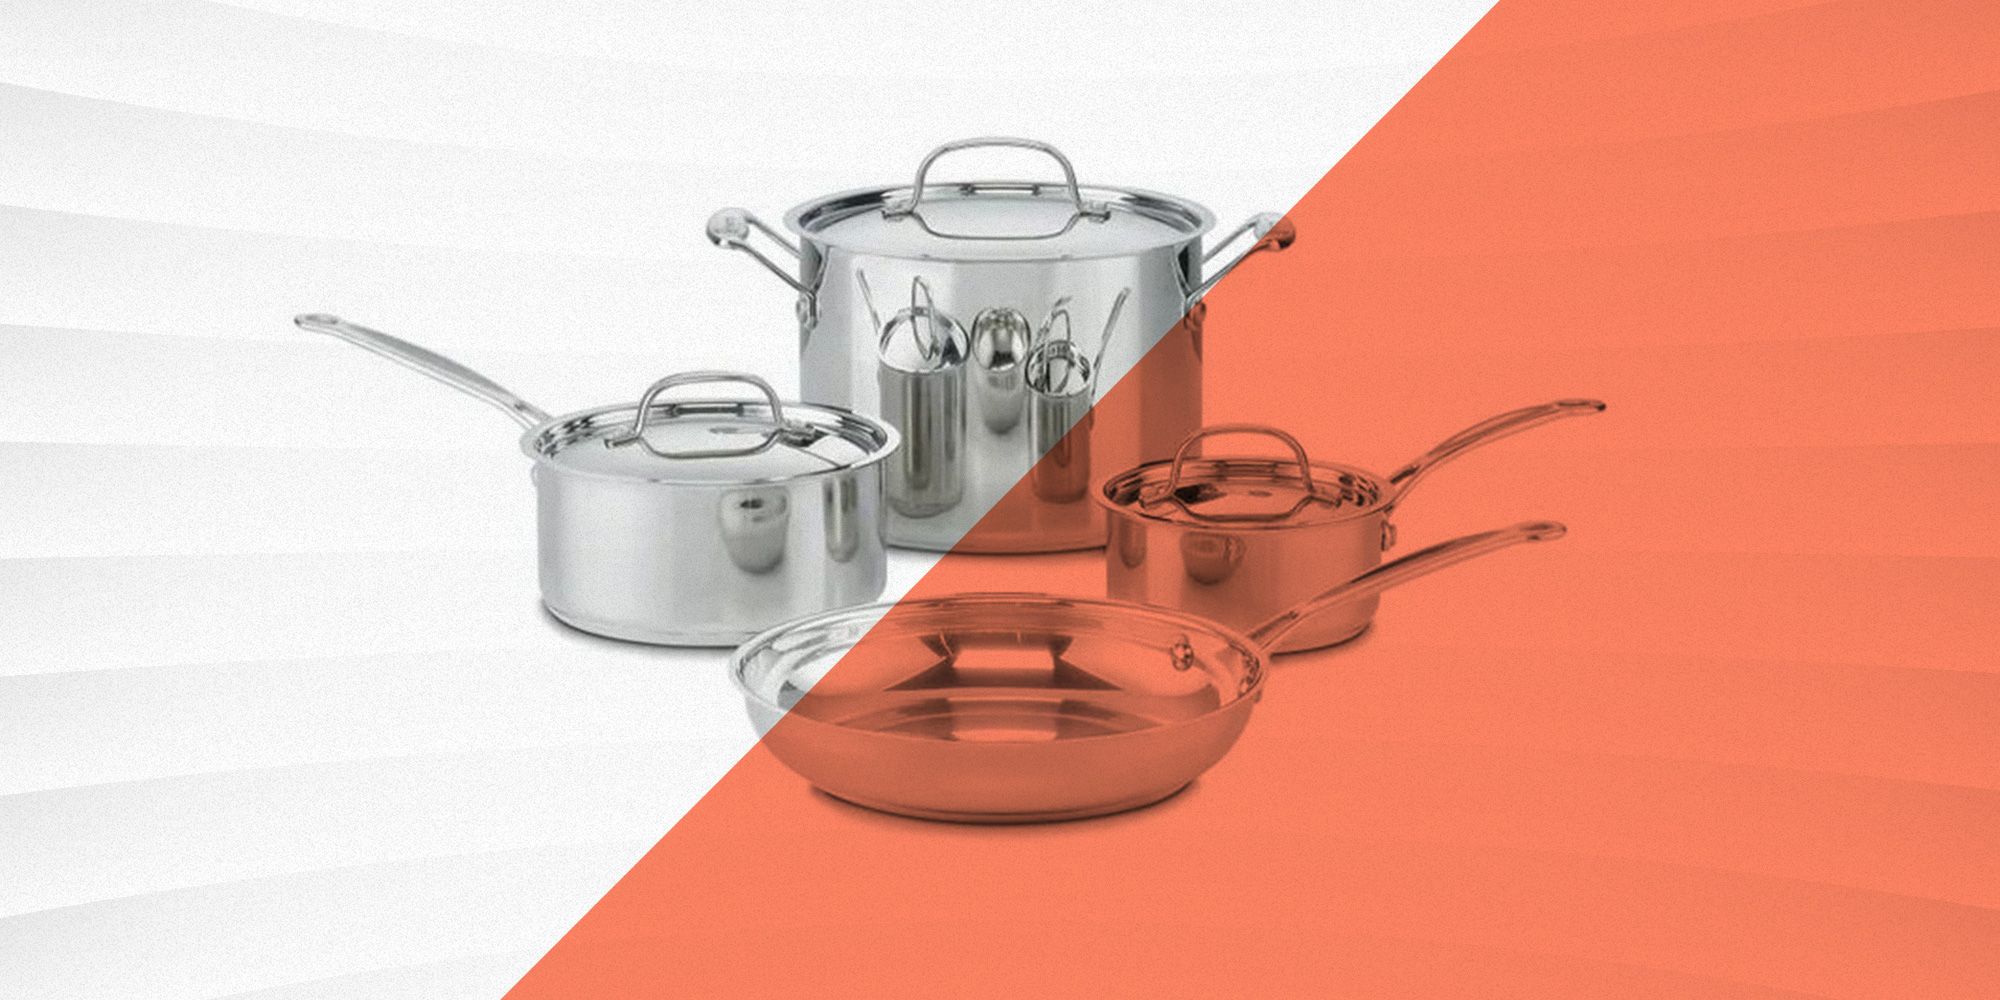 HexClad Hybrid Cookware 6 Piece Pot Set - 2, 3, and 8 Qt Saucepans with  Glass Lids 